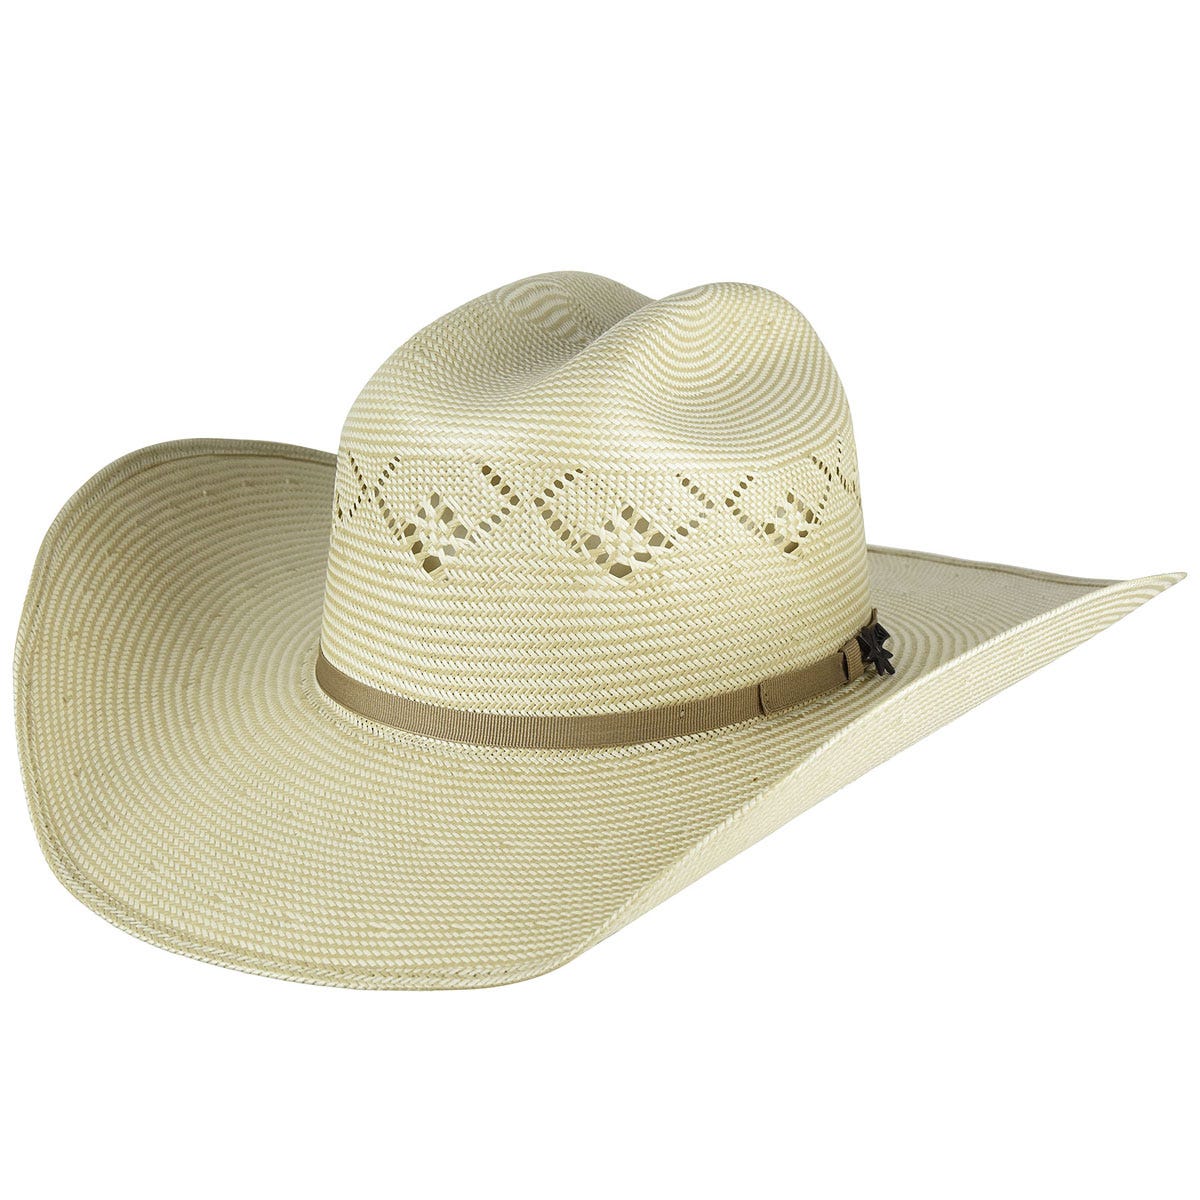 Bailey® 15X Koslo II Straw Cowboy Hat